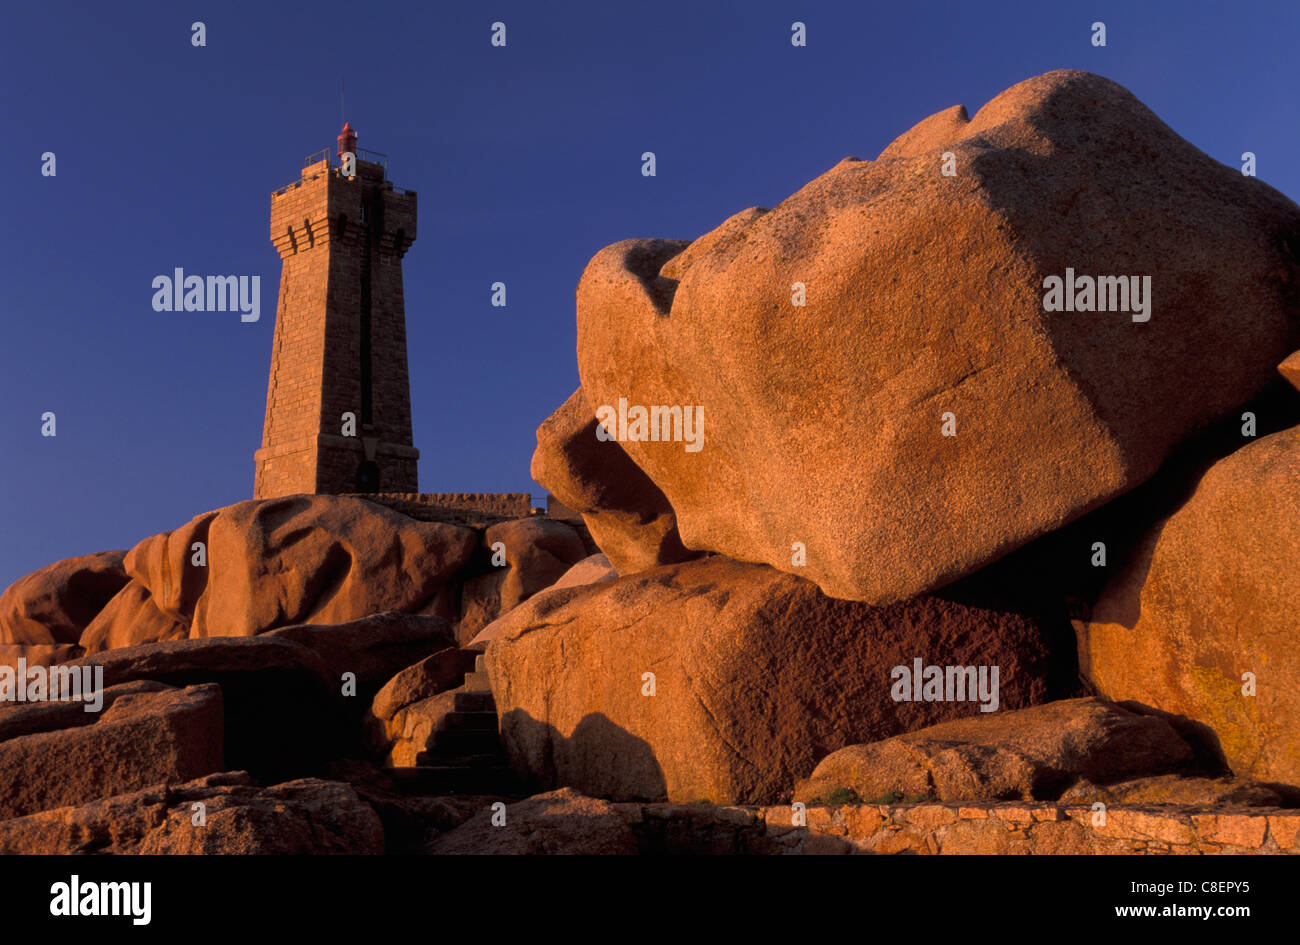 Lighthouse, Rocks, evening light, red rocks, Ploumanach, Brittany, France, Europe, orange Stock Photo